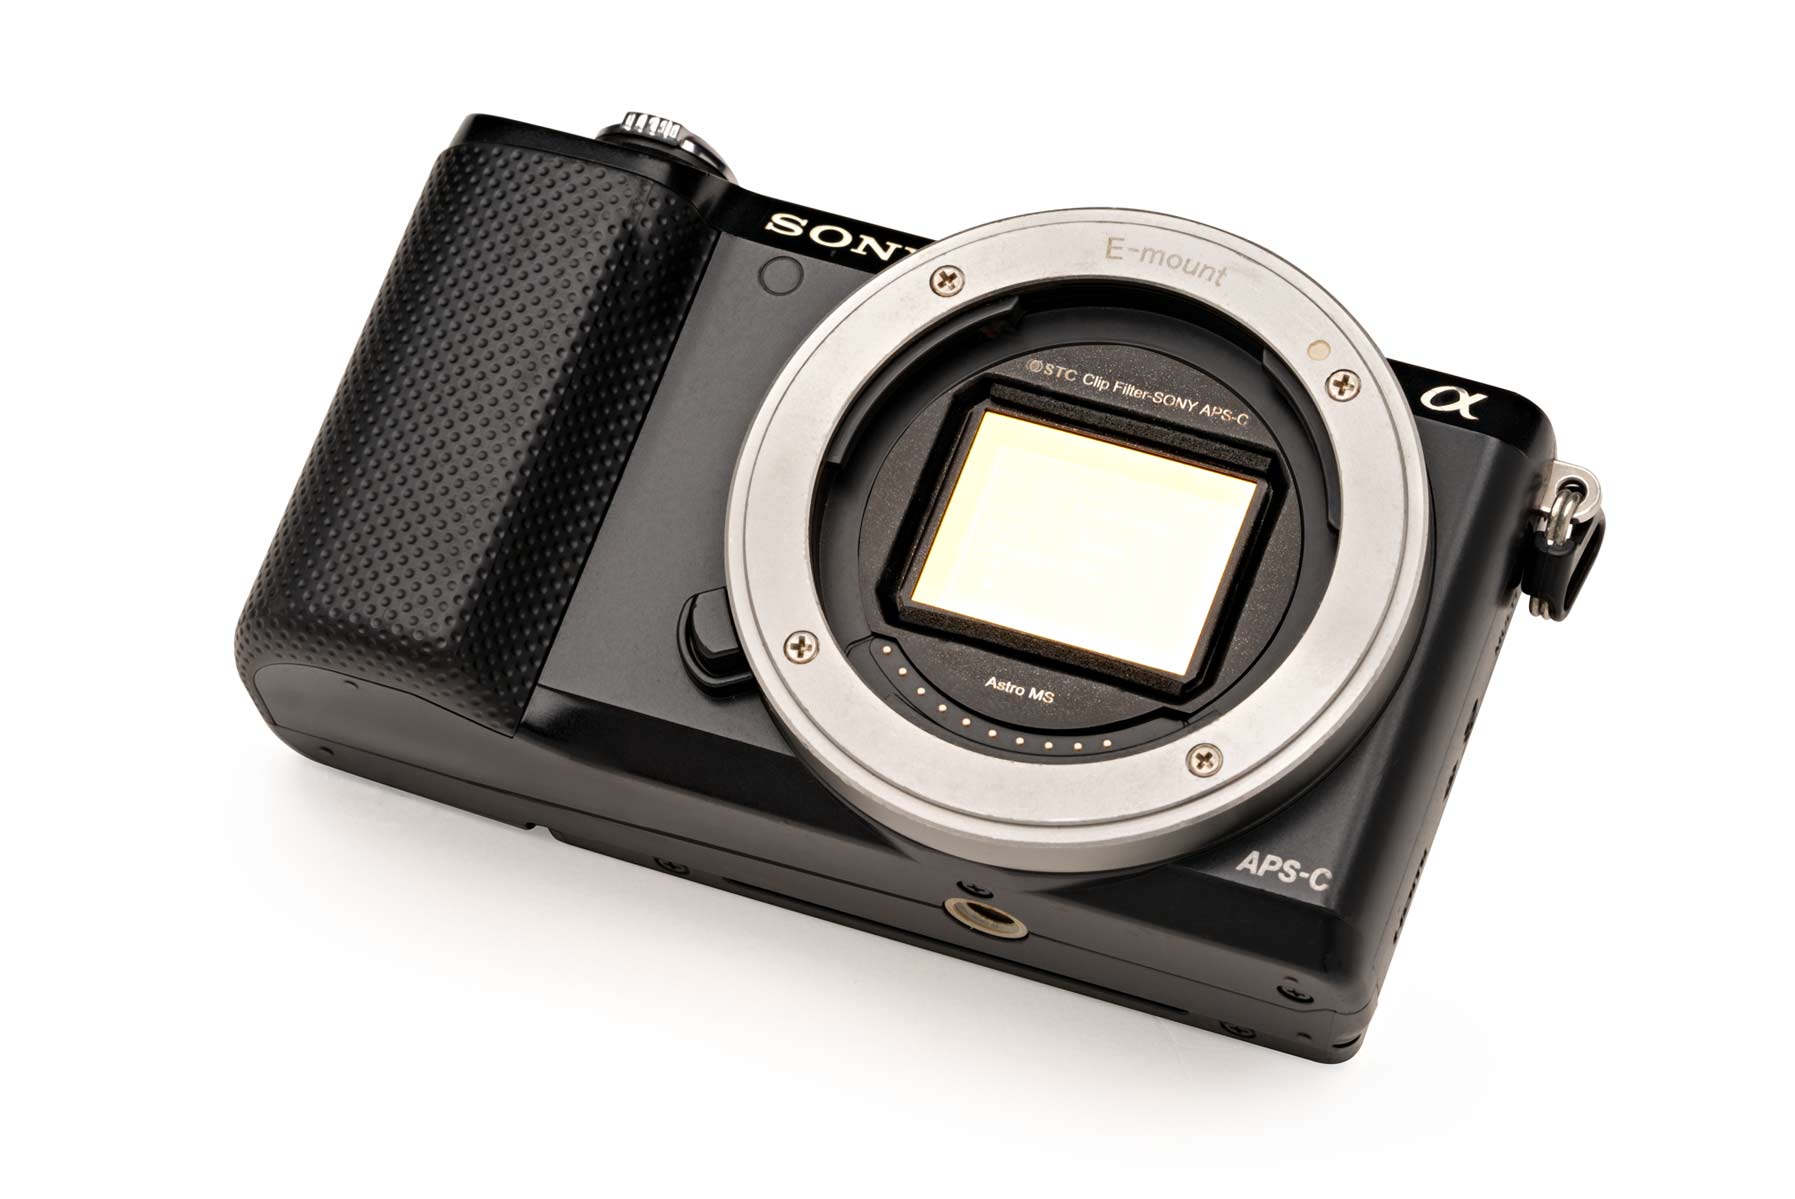 紅外線攝影 - 內置型濾鏡 for Sony APS-C 系列